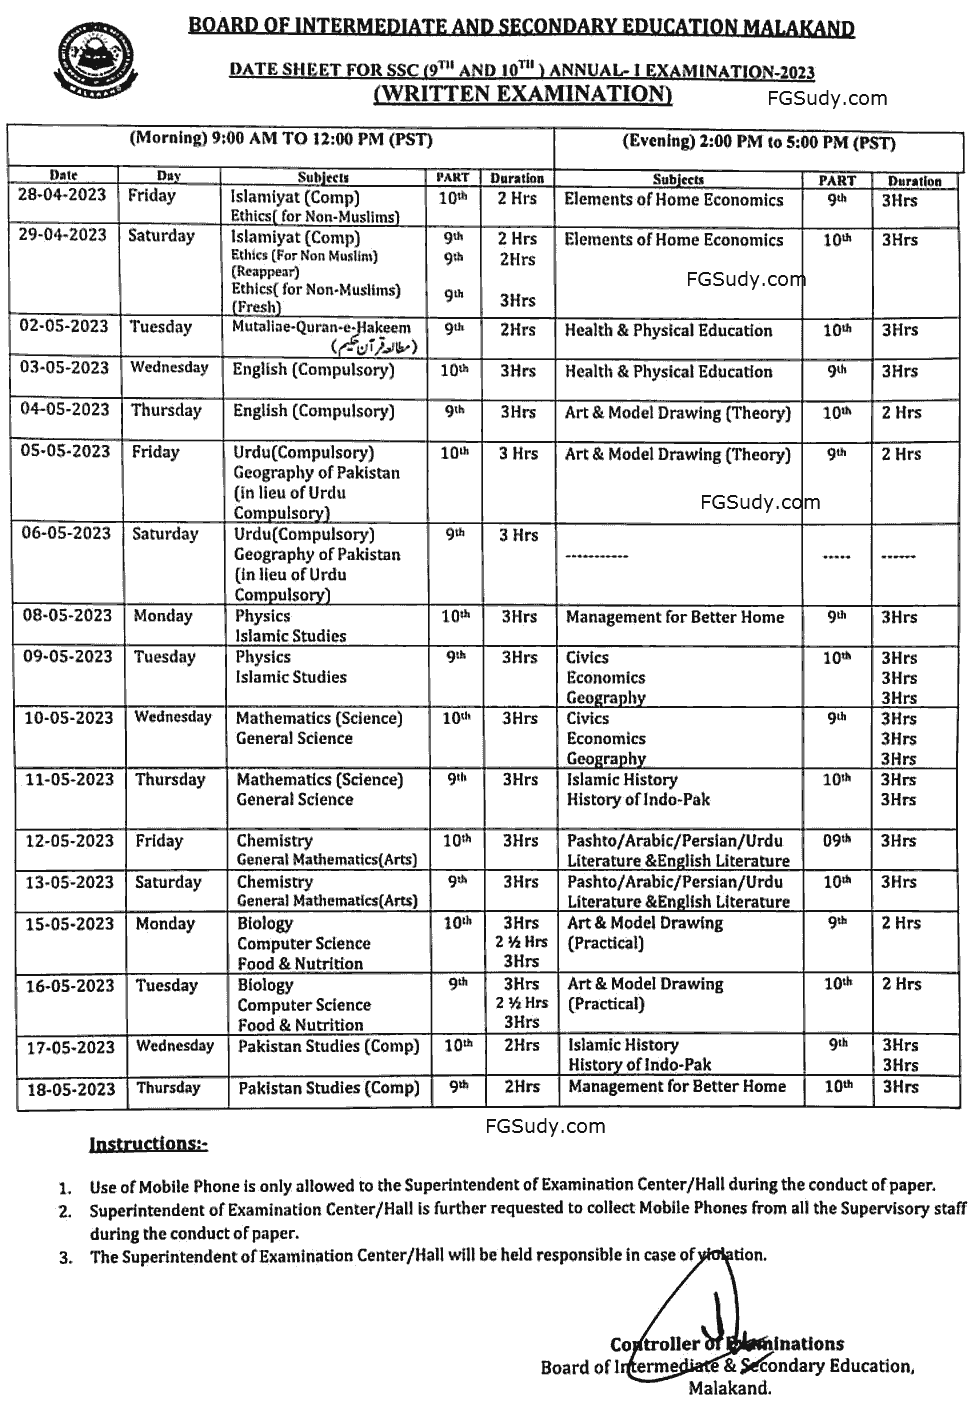 malakand-board-date-sheet-2023-class-10th-9th.png